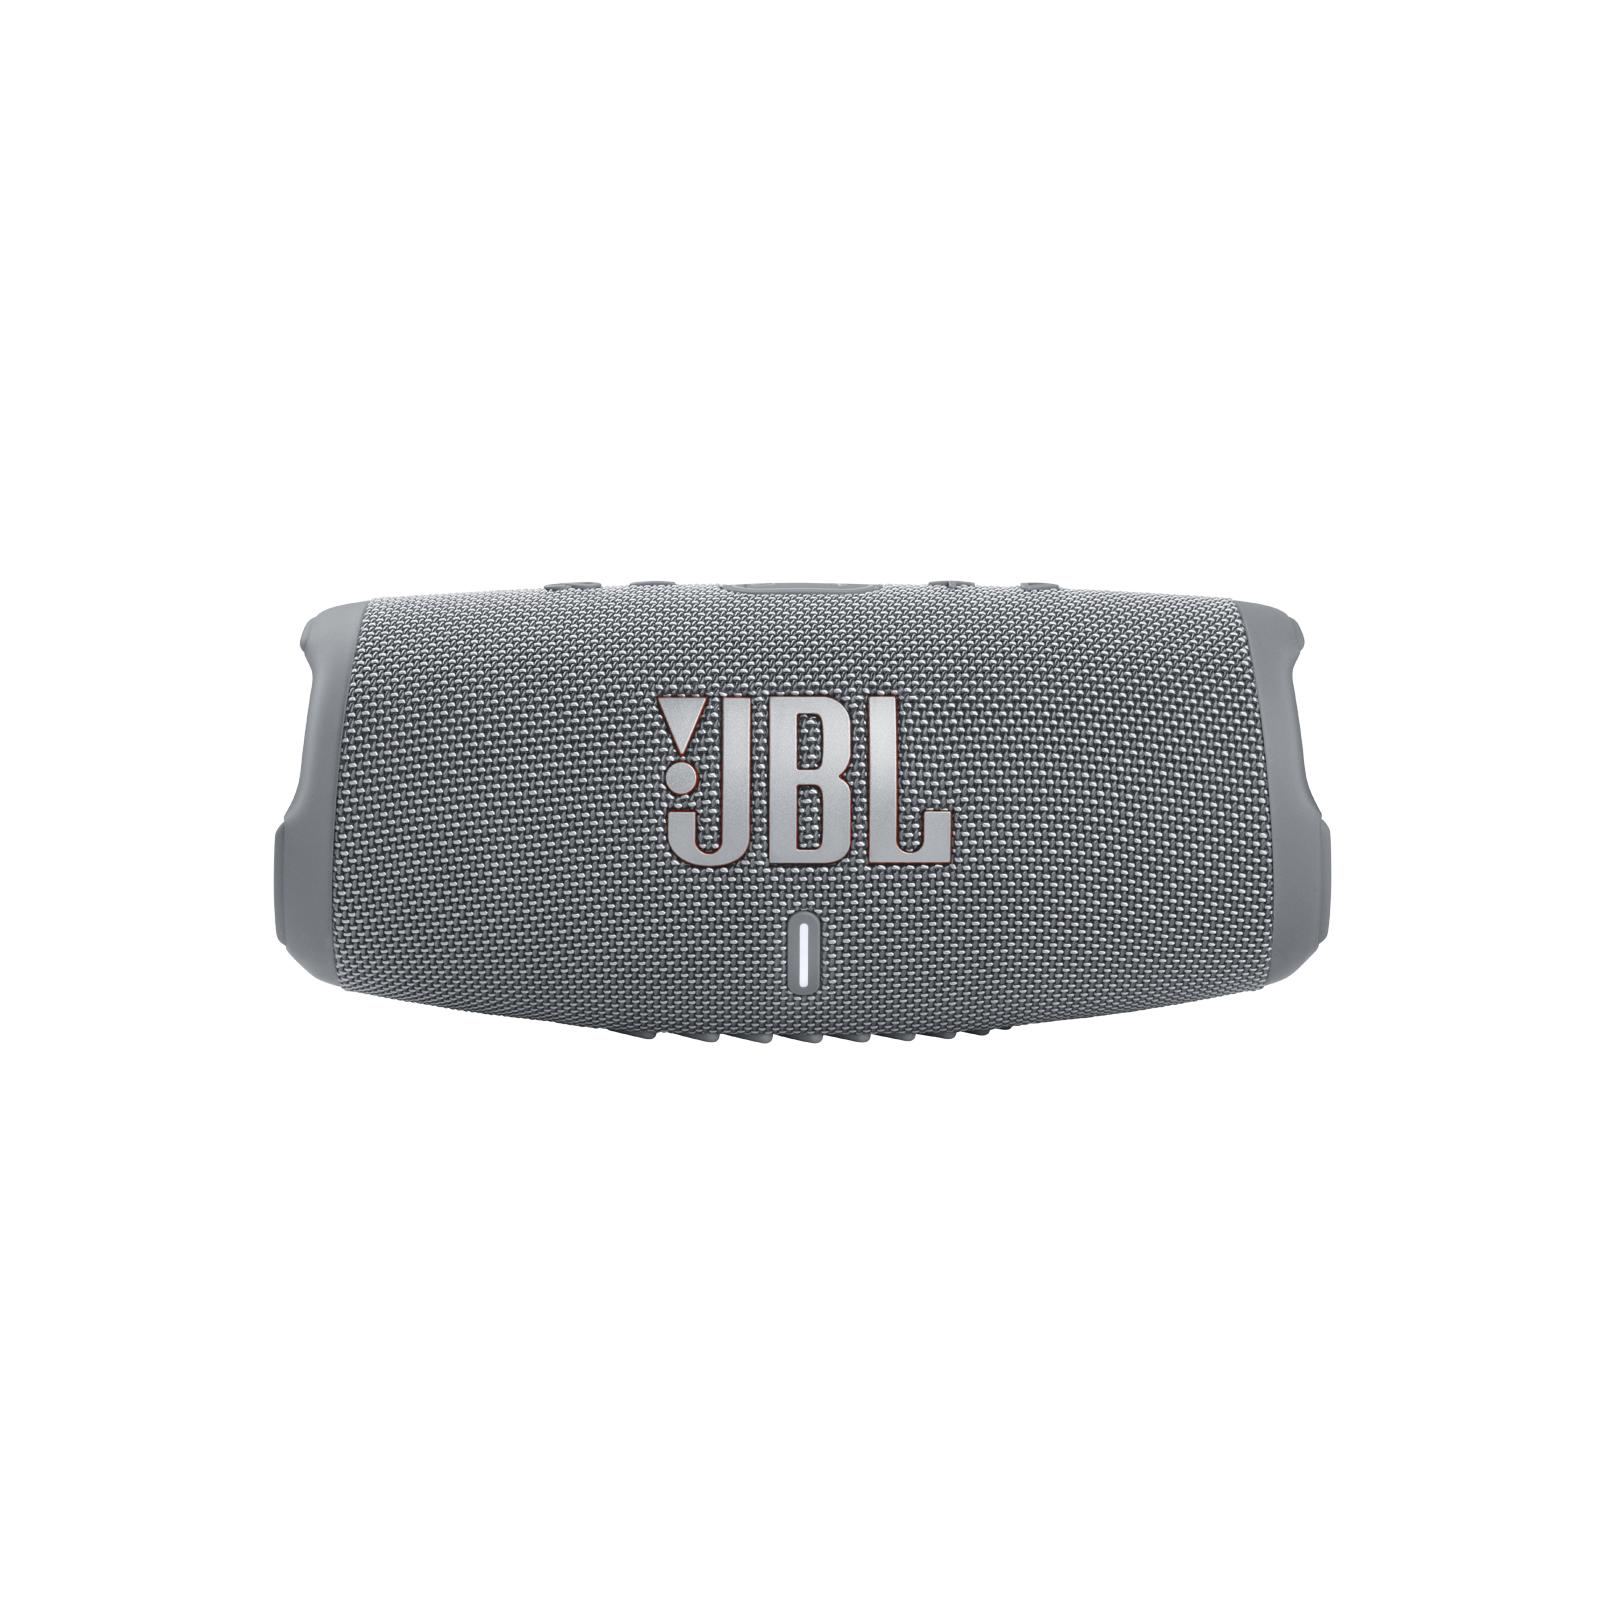 JBL Charge 5 - Grey - Portable Waterproof Speaker with Powerbank - Front